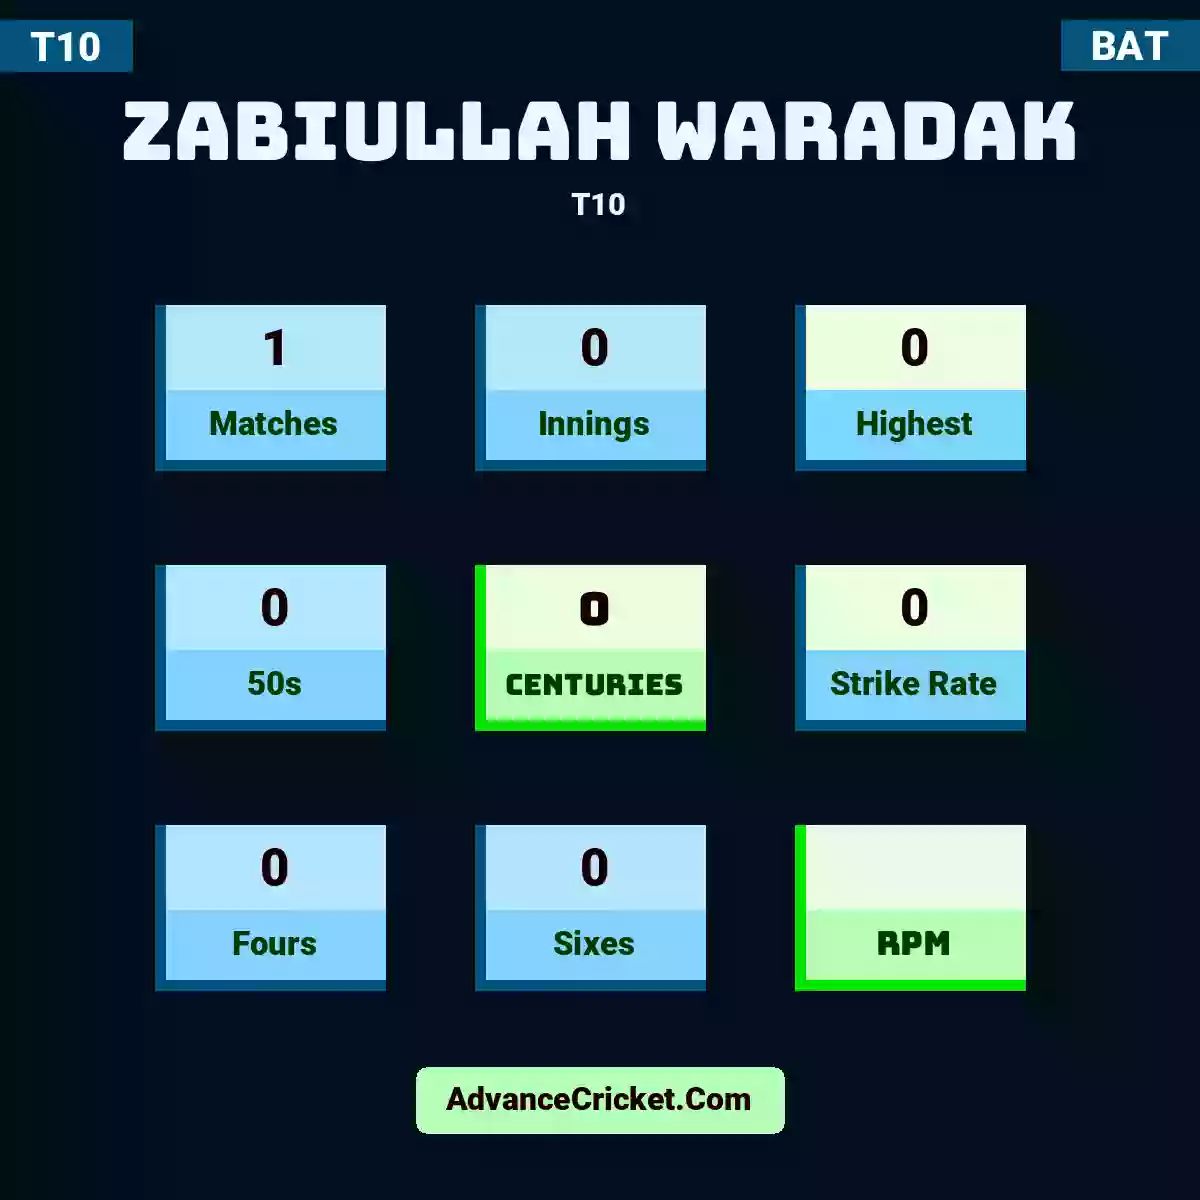 Zabiullah Waradak T10 , Zabiullah Waradak played 1 matches, scored 0 runs as highest, 0 half-centuries, and 0 centuries, with a strike rate of 0. Z.Waradak hit 0 fours and 0 sixes.